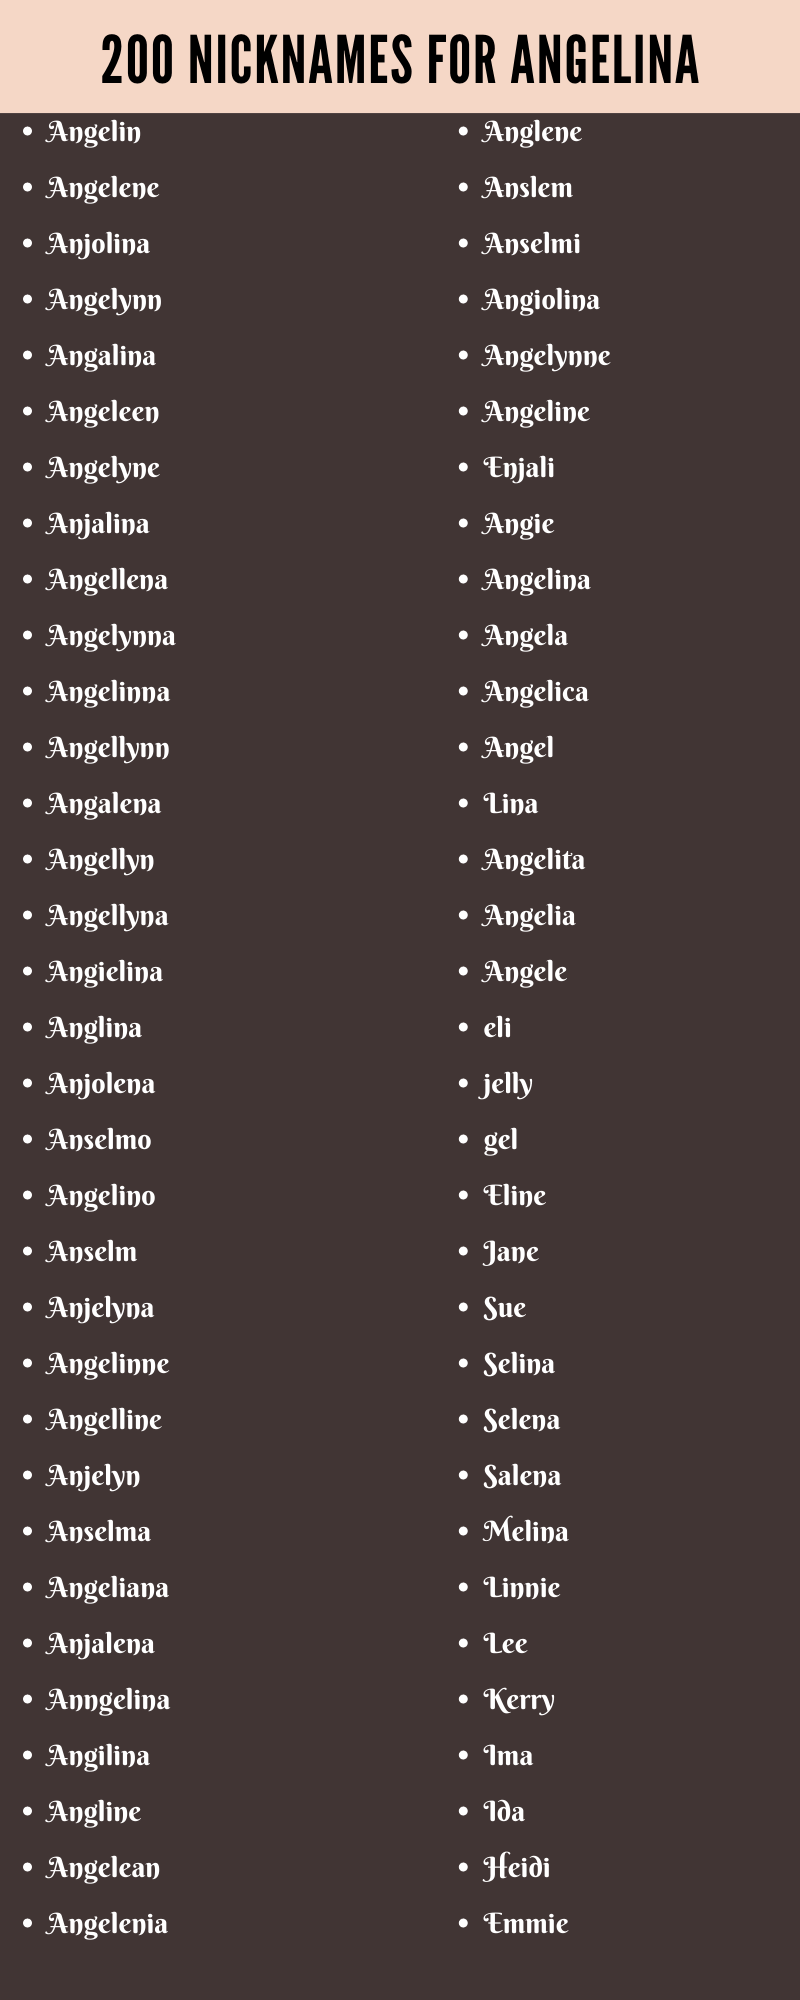 Nicknames For Angelina